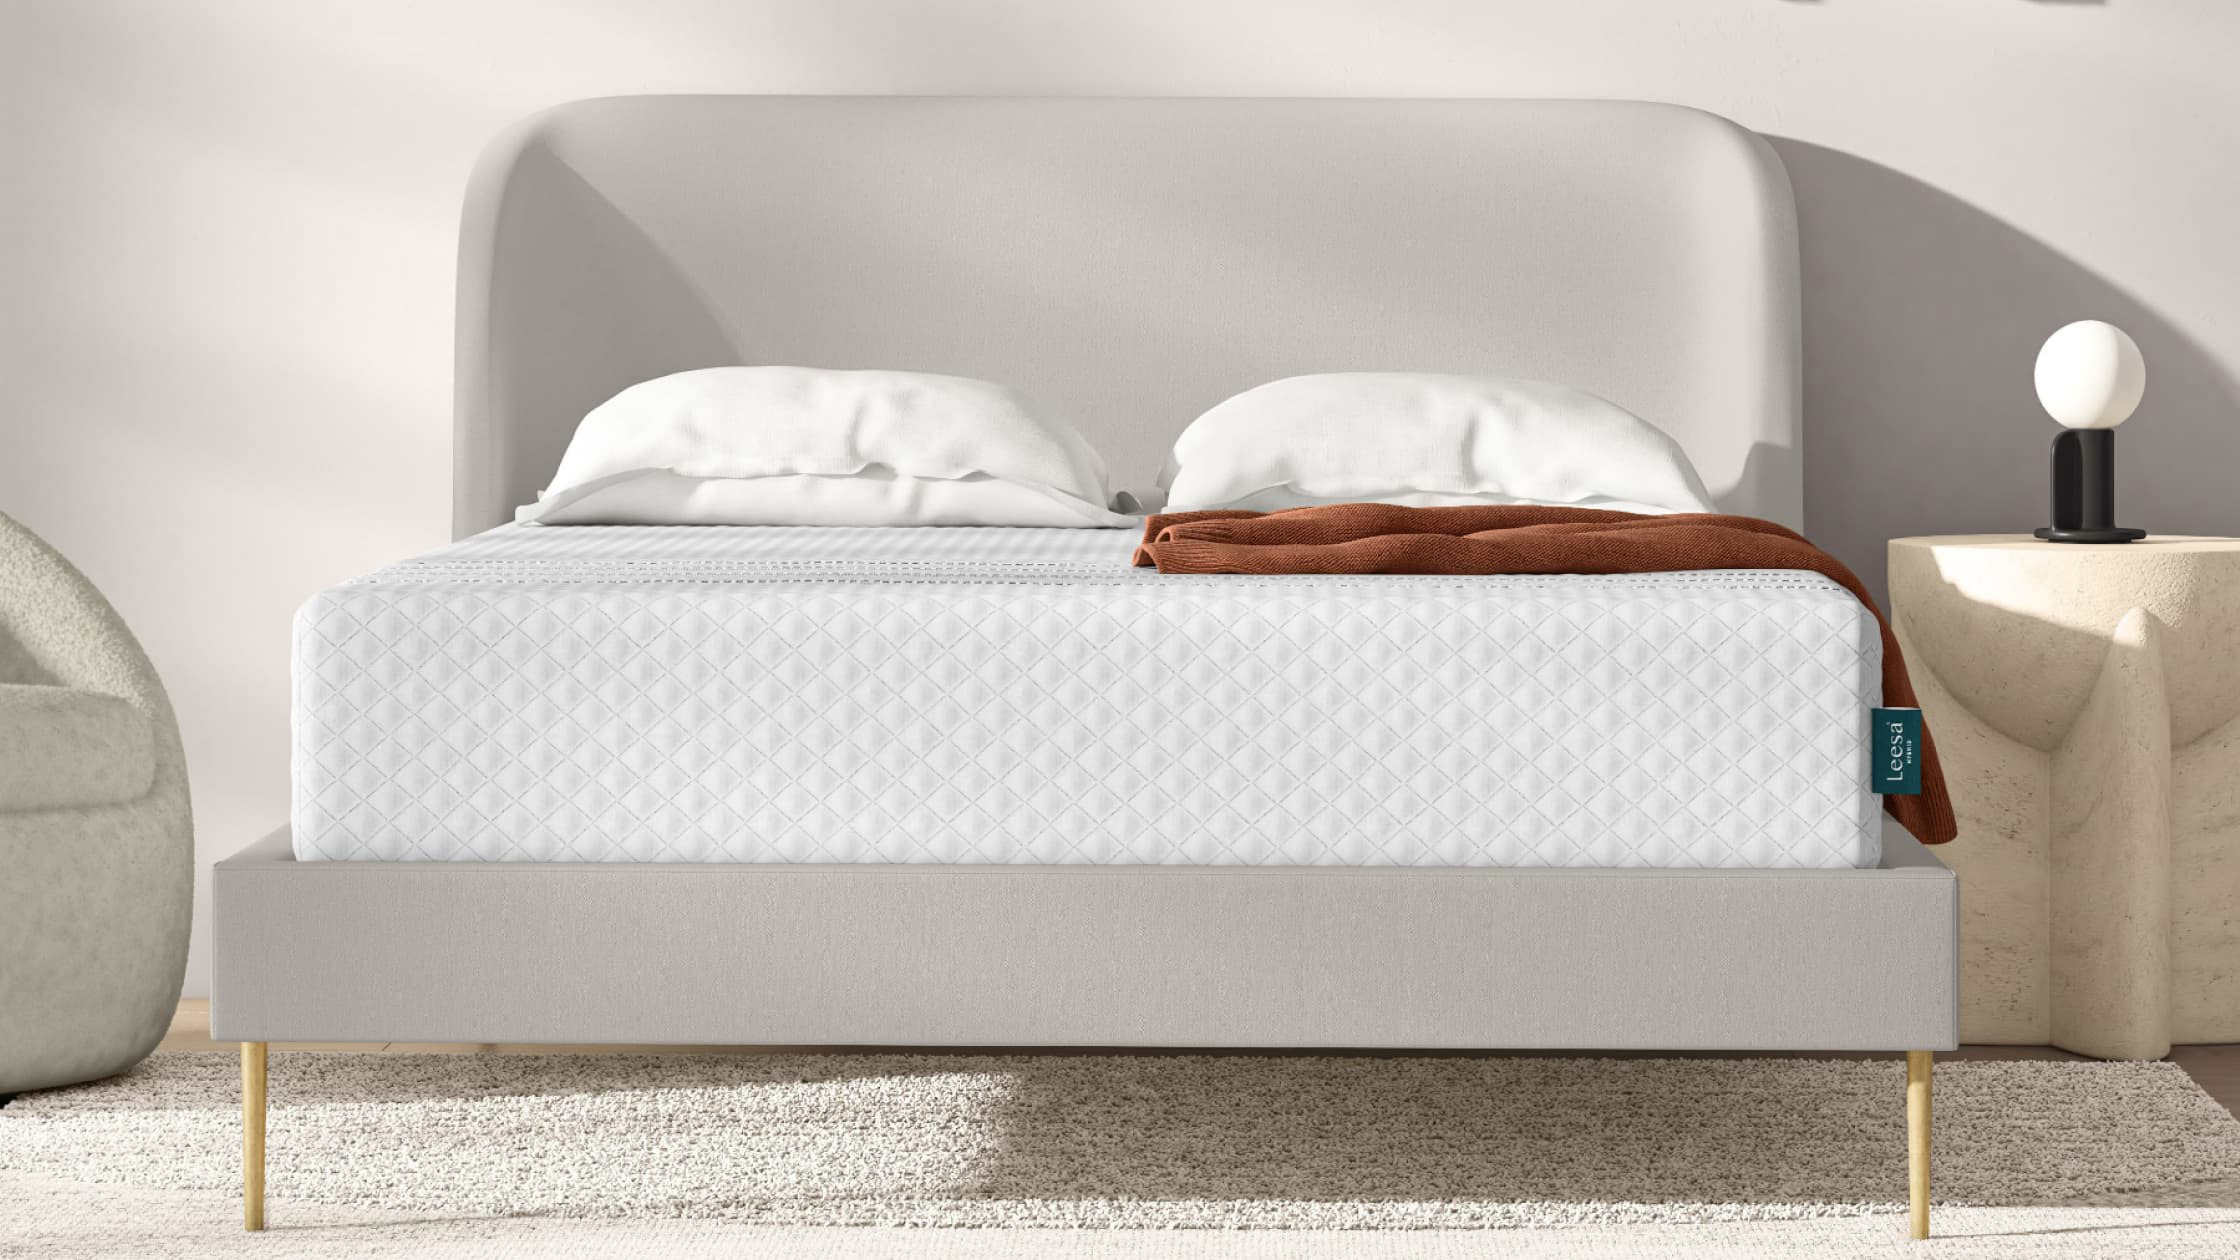 Leesa Sapira Hybrid mattress on a grey bedframe placed against a cream wall